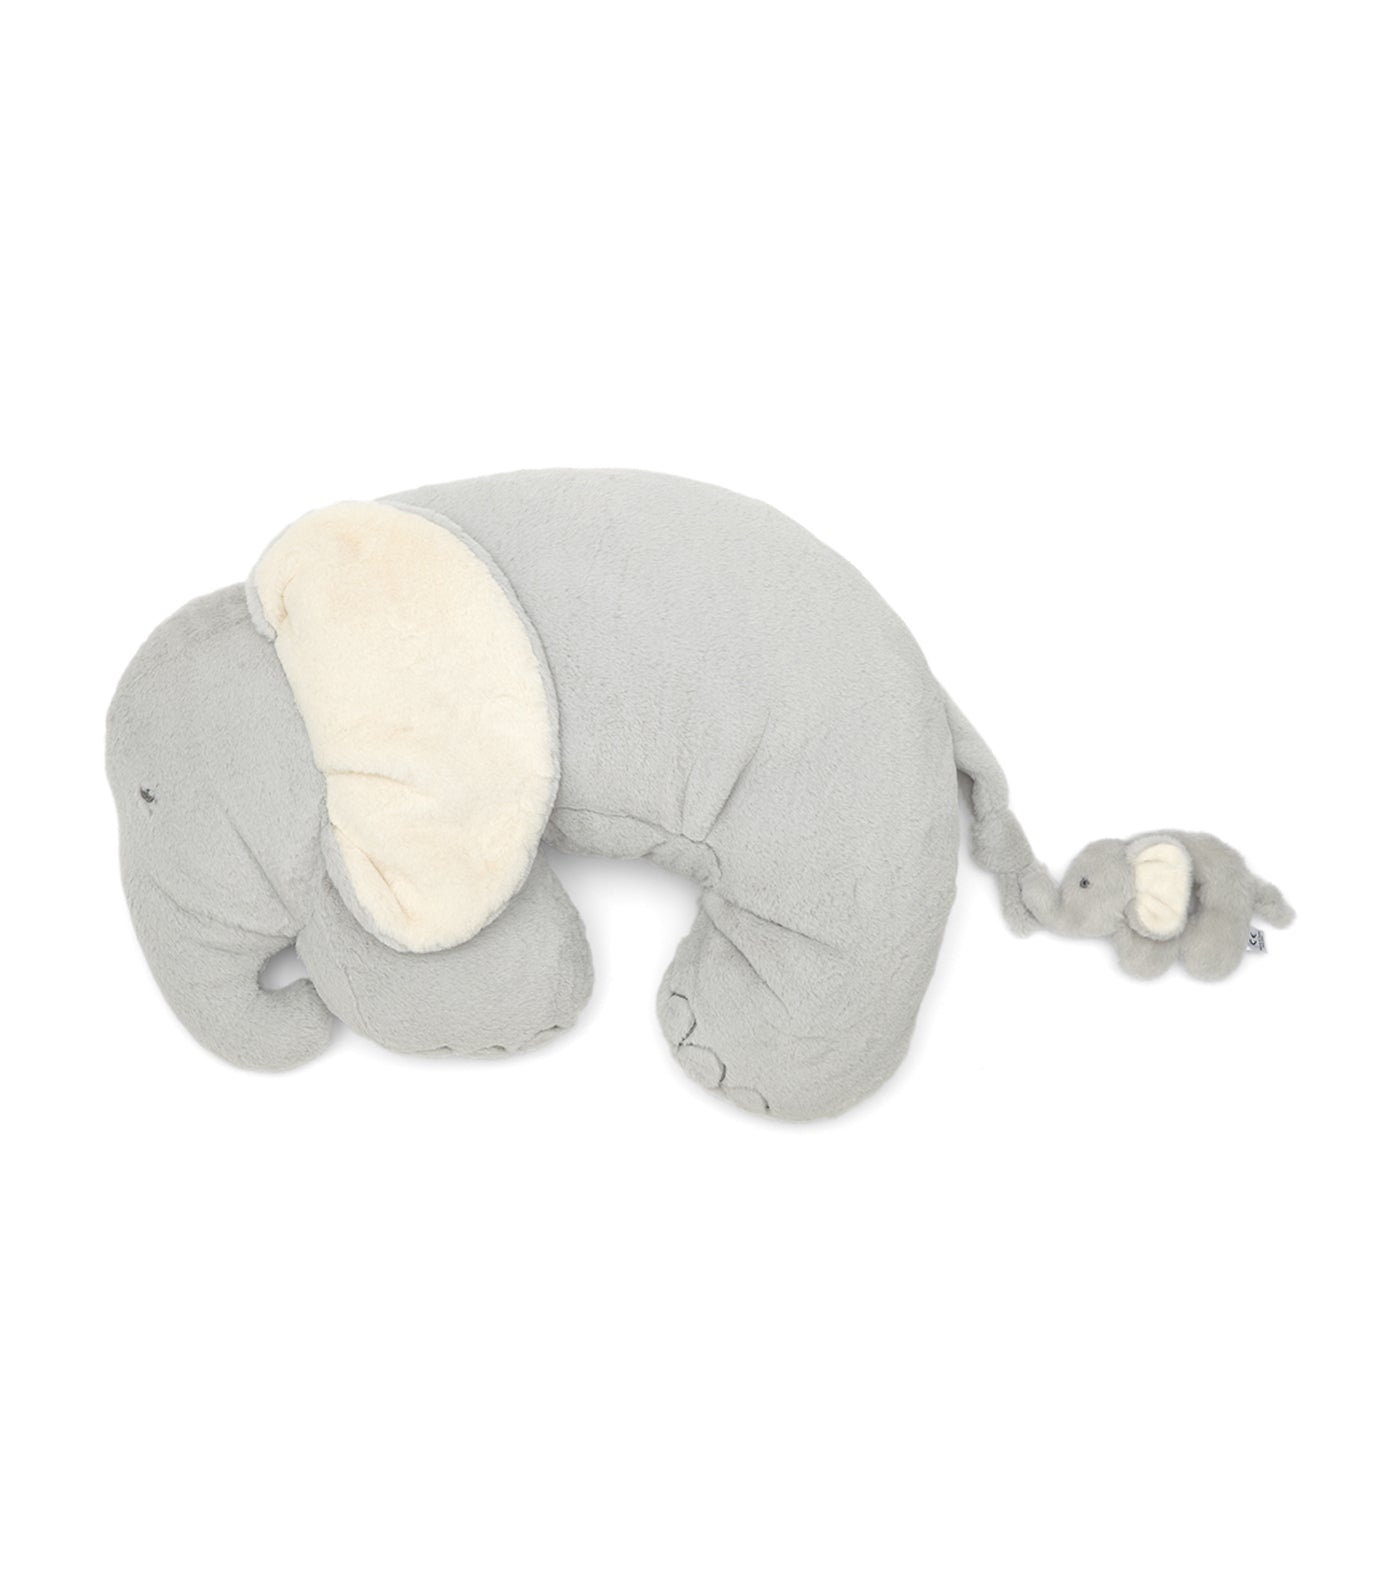 mamas & papas gray elephant my first tummy time snugglerug